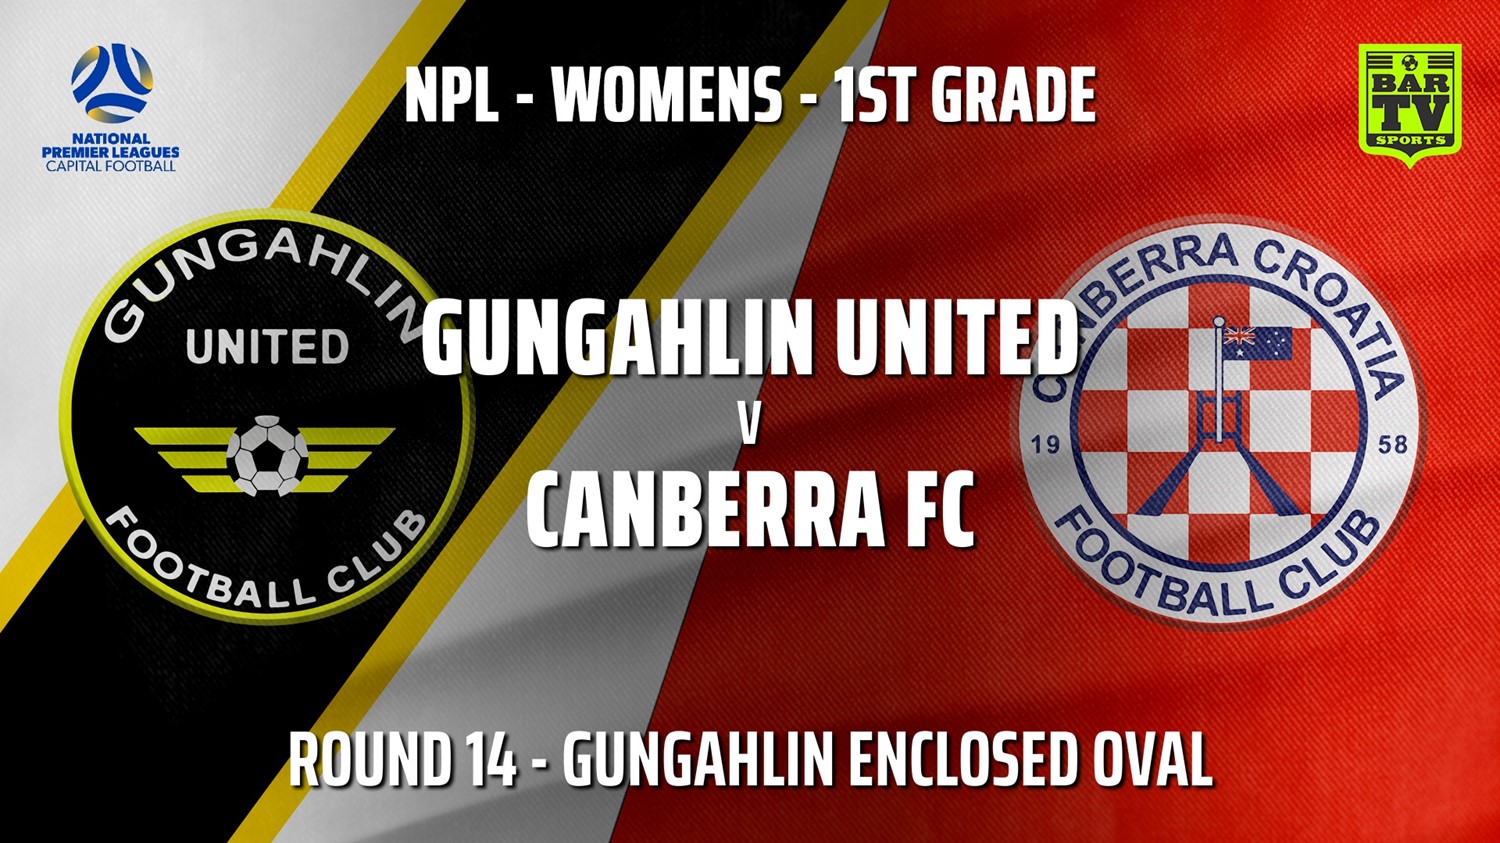 210718-Capital Womens Round 14 - Gungahlin United FC (women) v Canberra FC (women) Slate Image